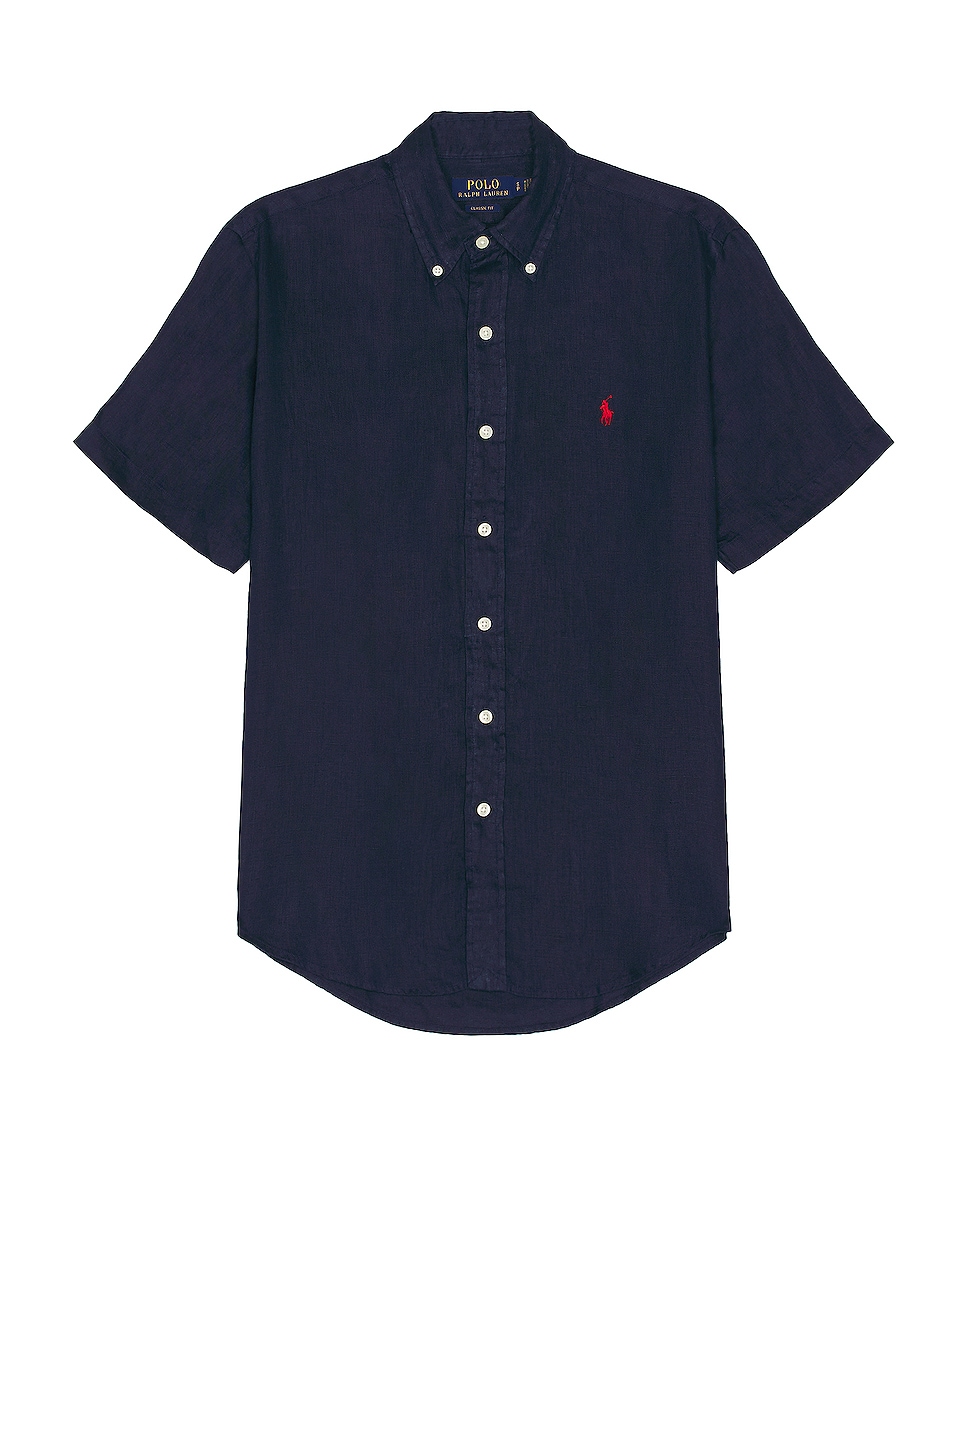 Image 1 of Polo Ralph Lauren Piece Dye Sport Shirt in Newport Navy